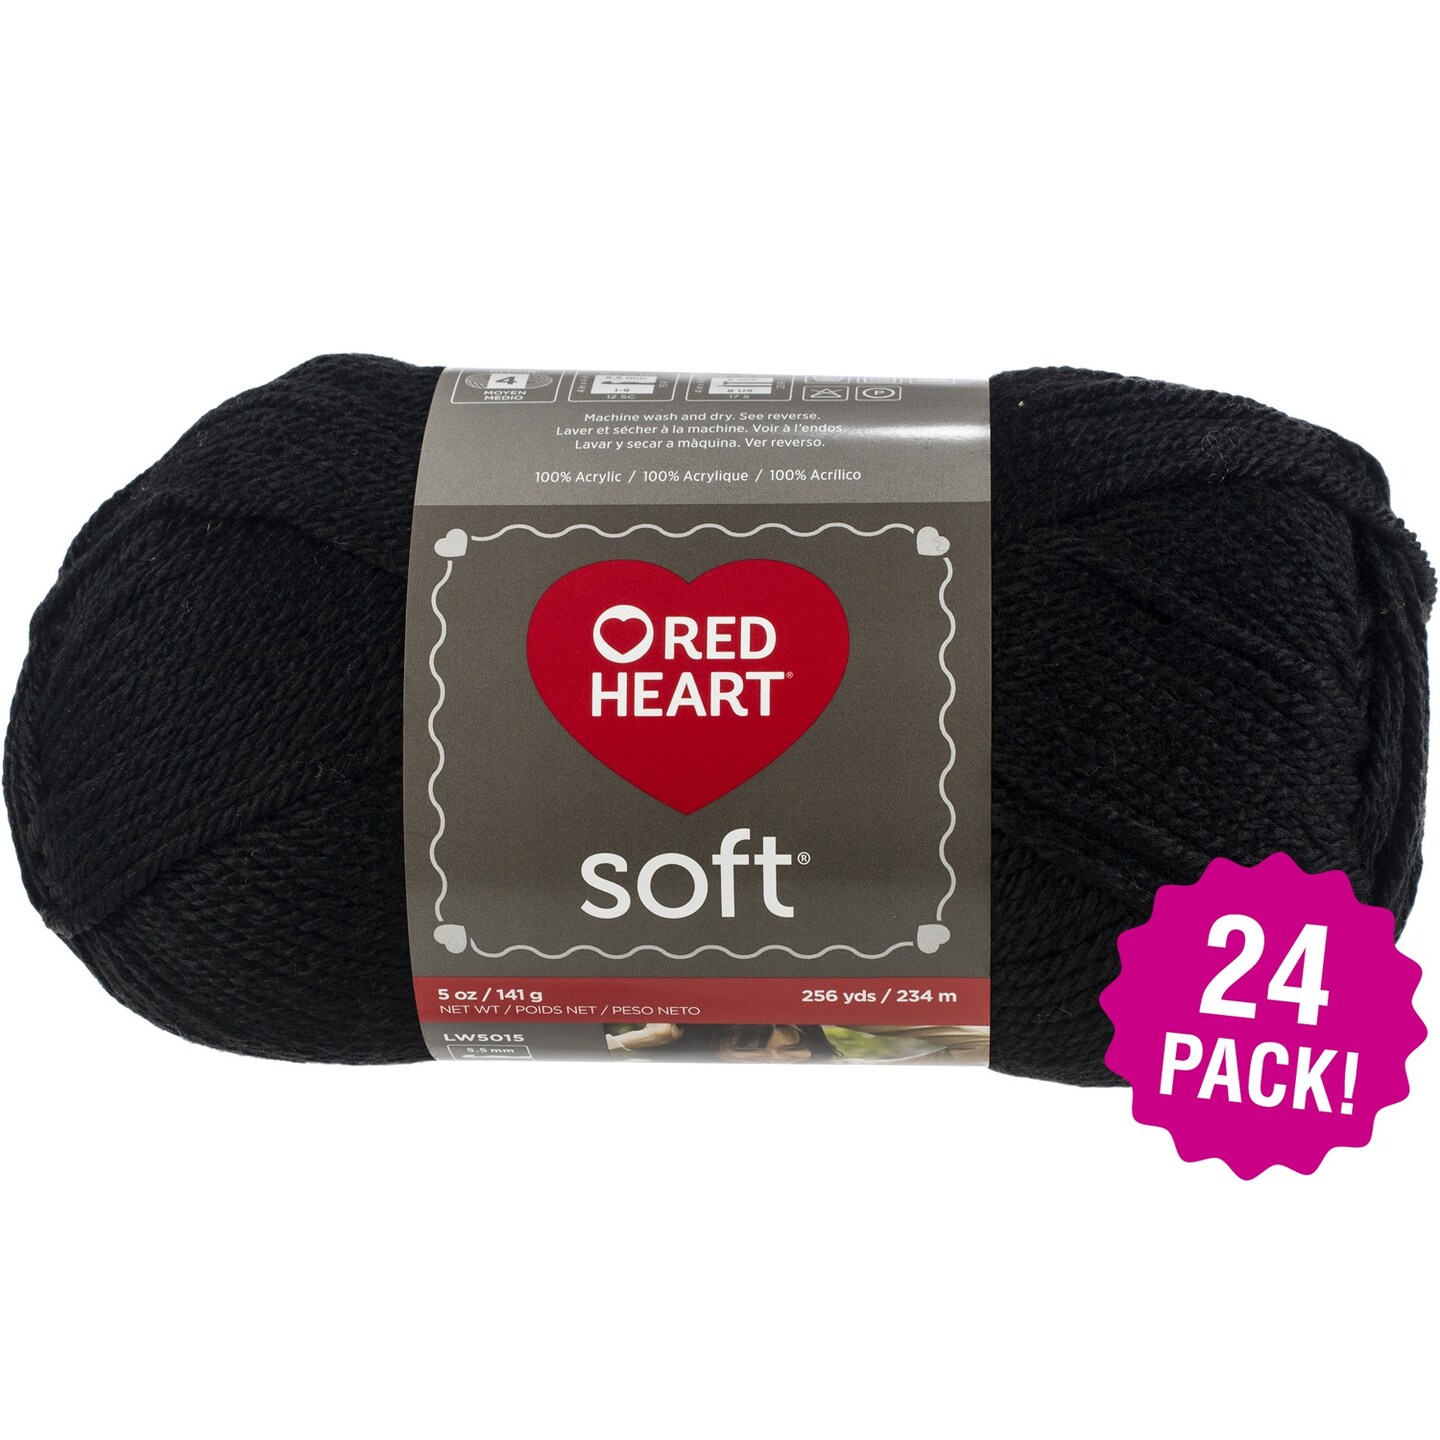 Multipack of 24 - Red Heart Soft Yarn-Black